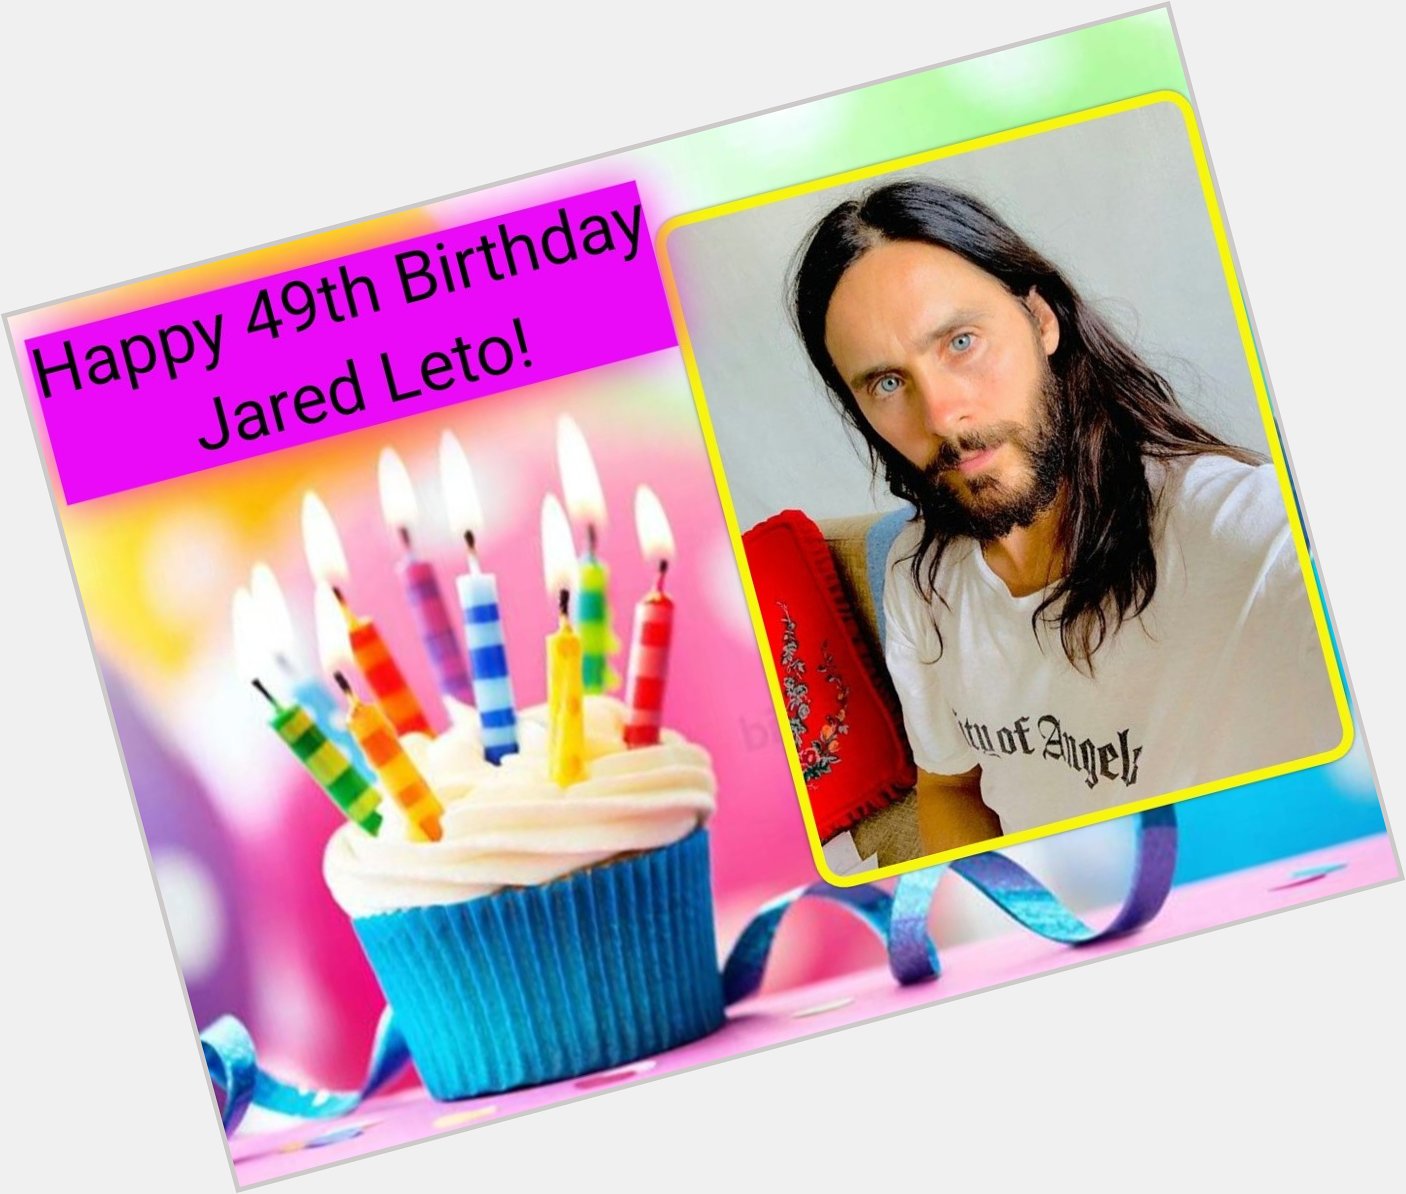 Happy 49th Birthday Jared Leto!     